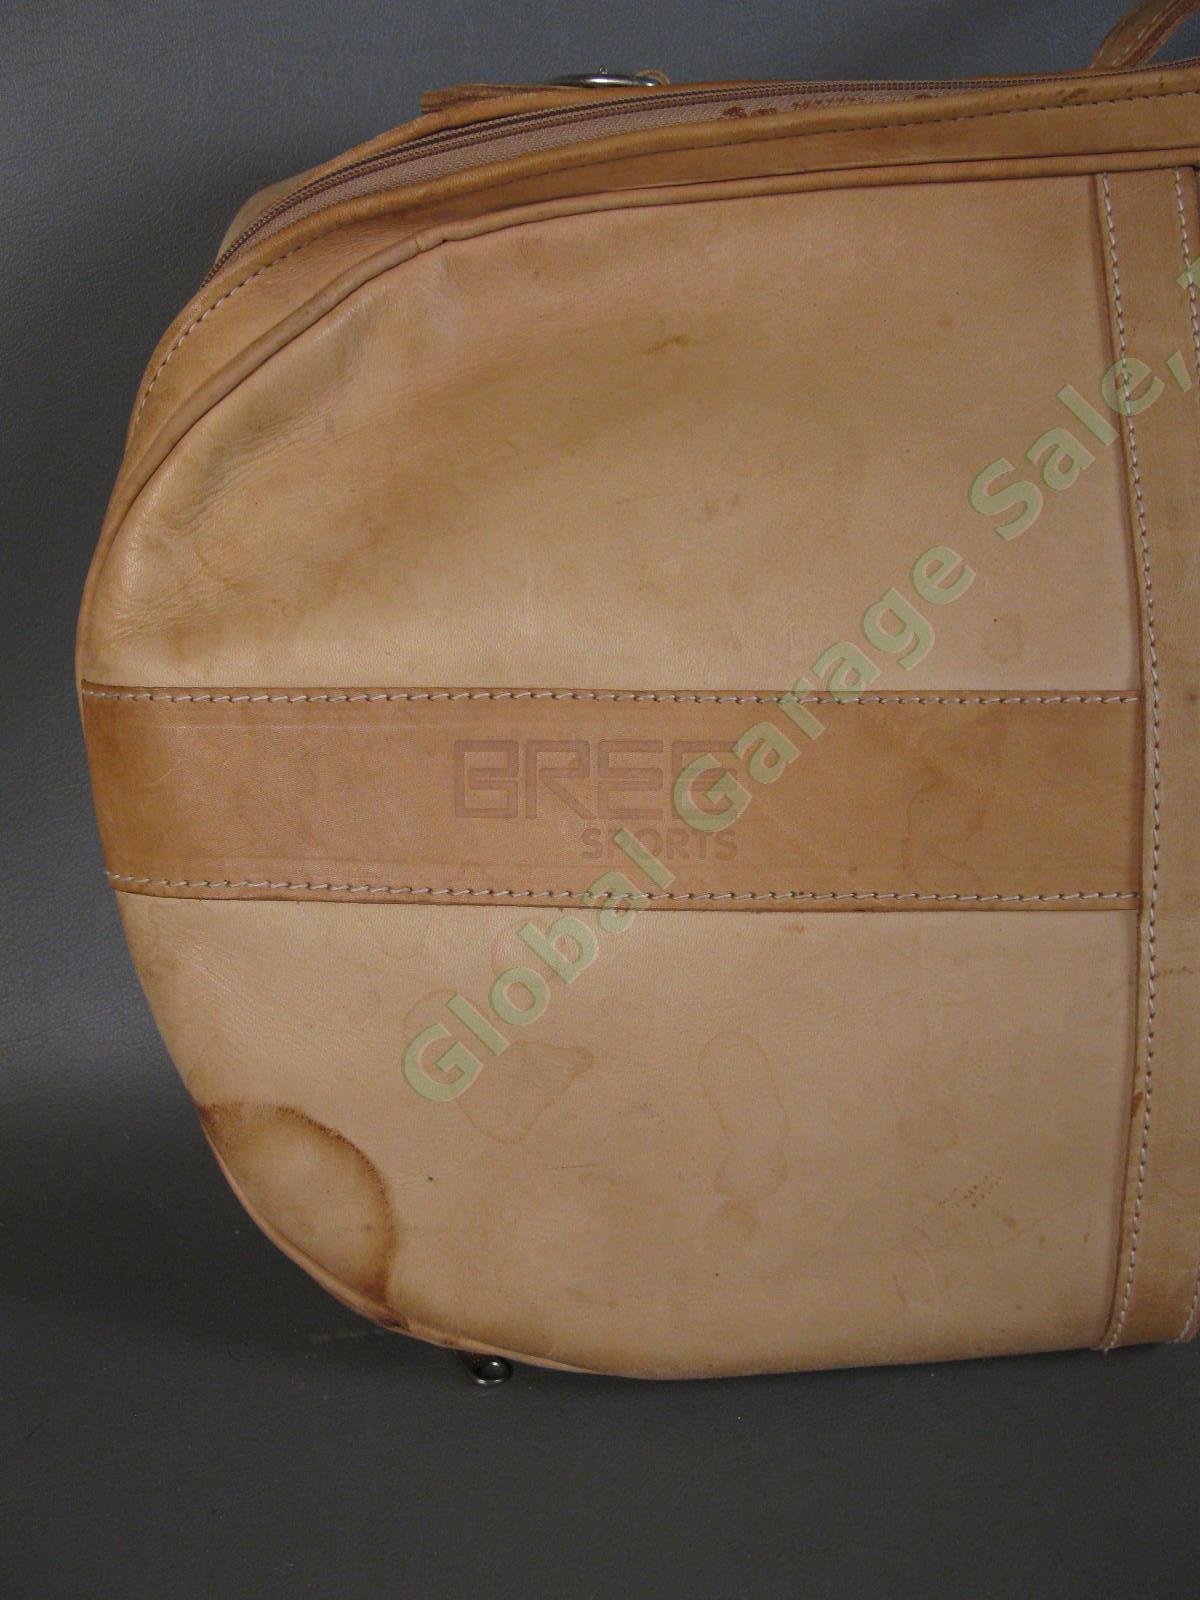 BREE Sports Leather Shoulder Tennis Travel Bag West Germany VINTAGE Luxury NR 1